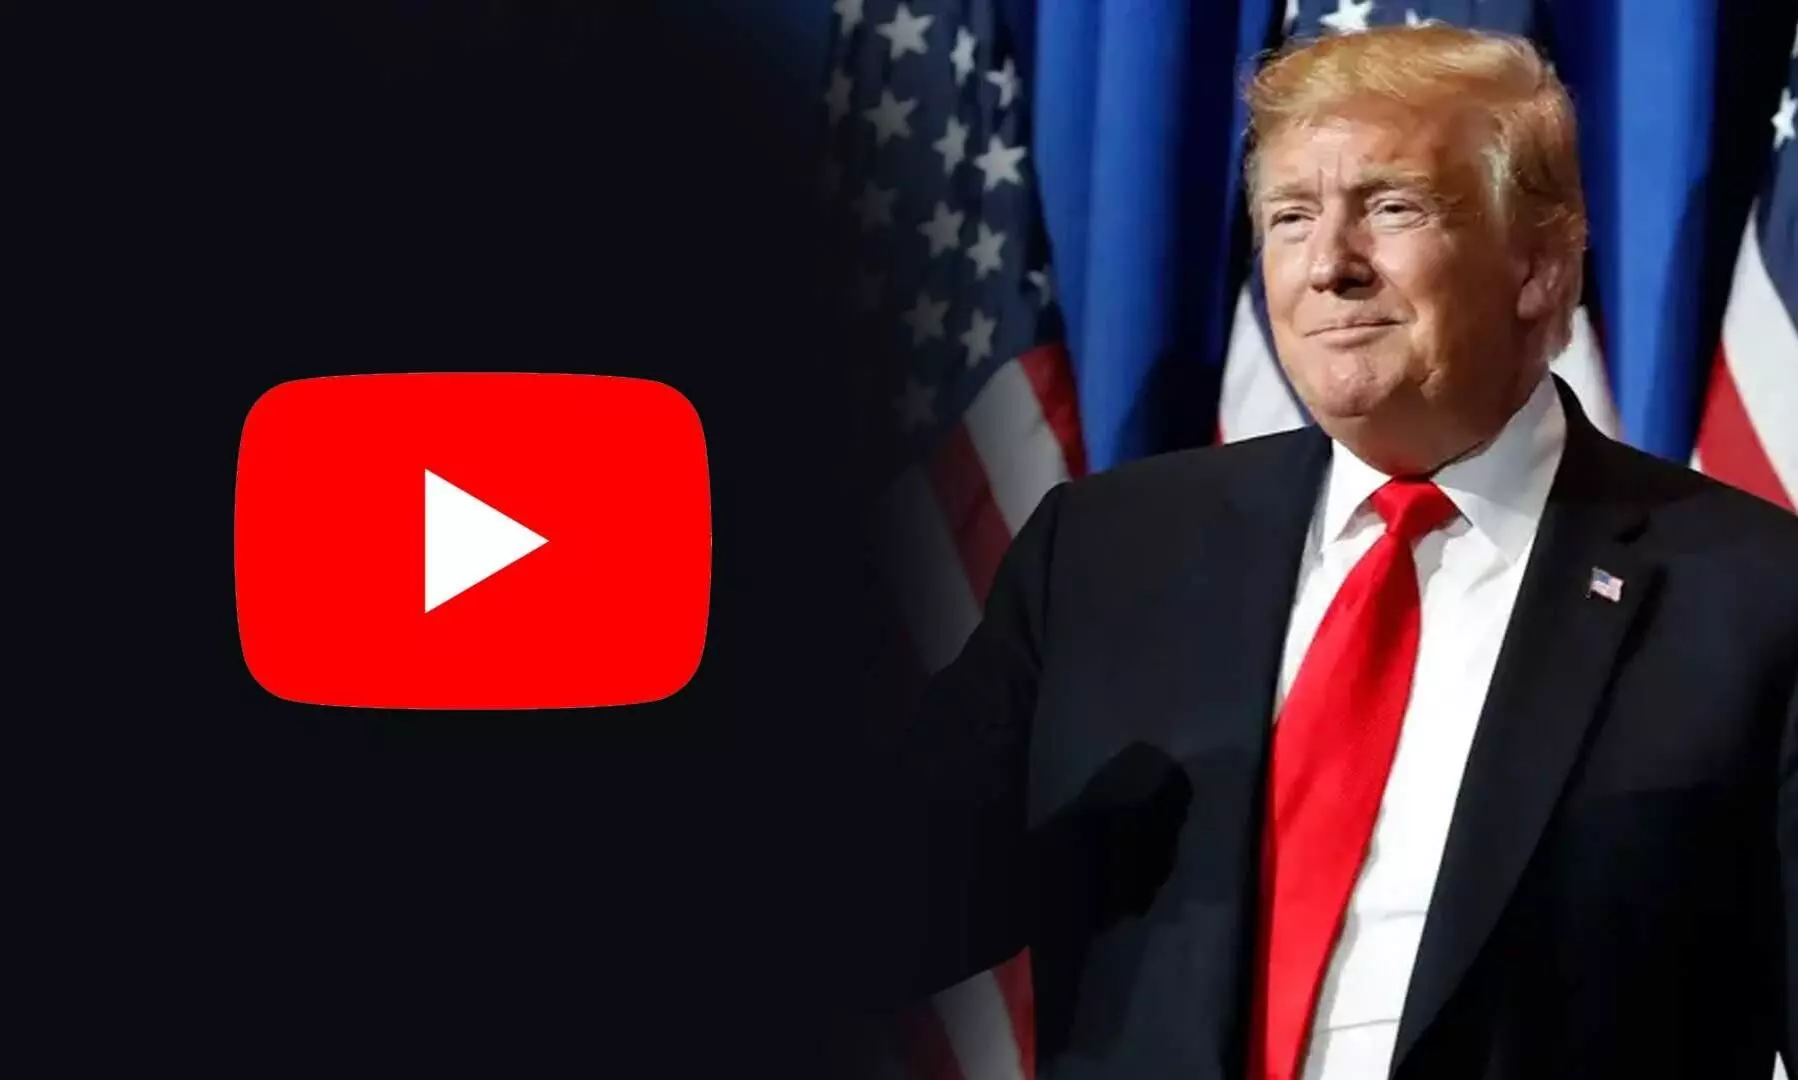 YouTube deletes new Trump video, suspends fresh uploads